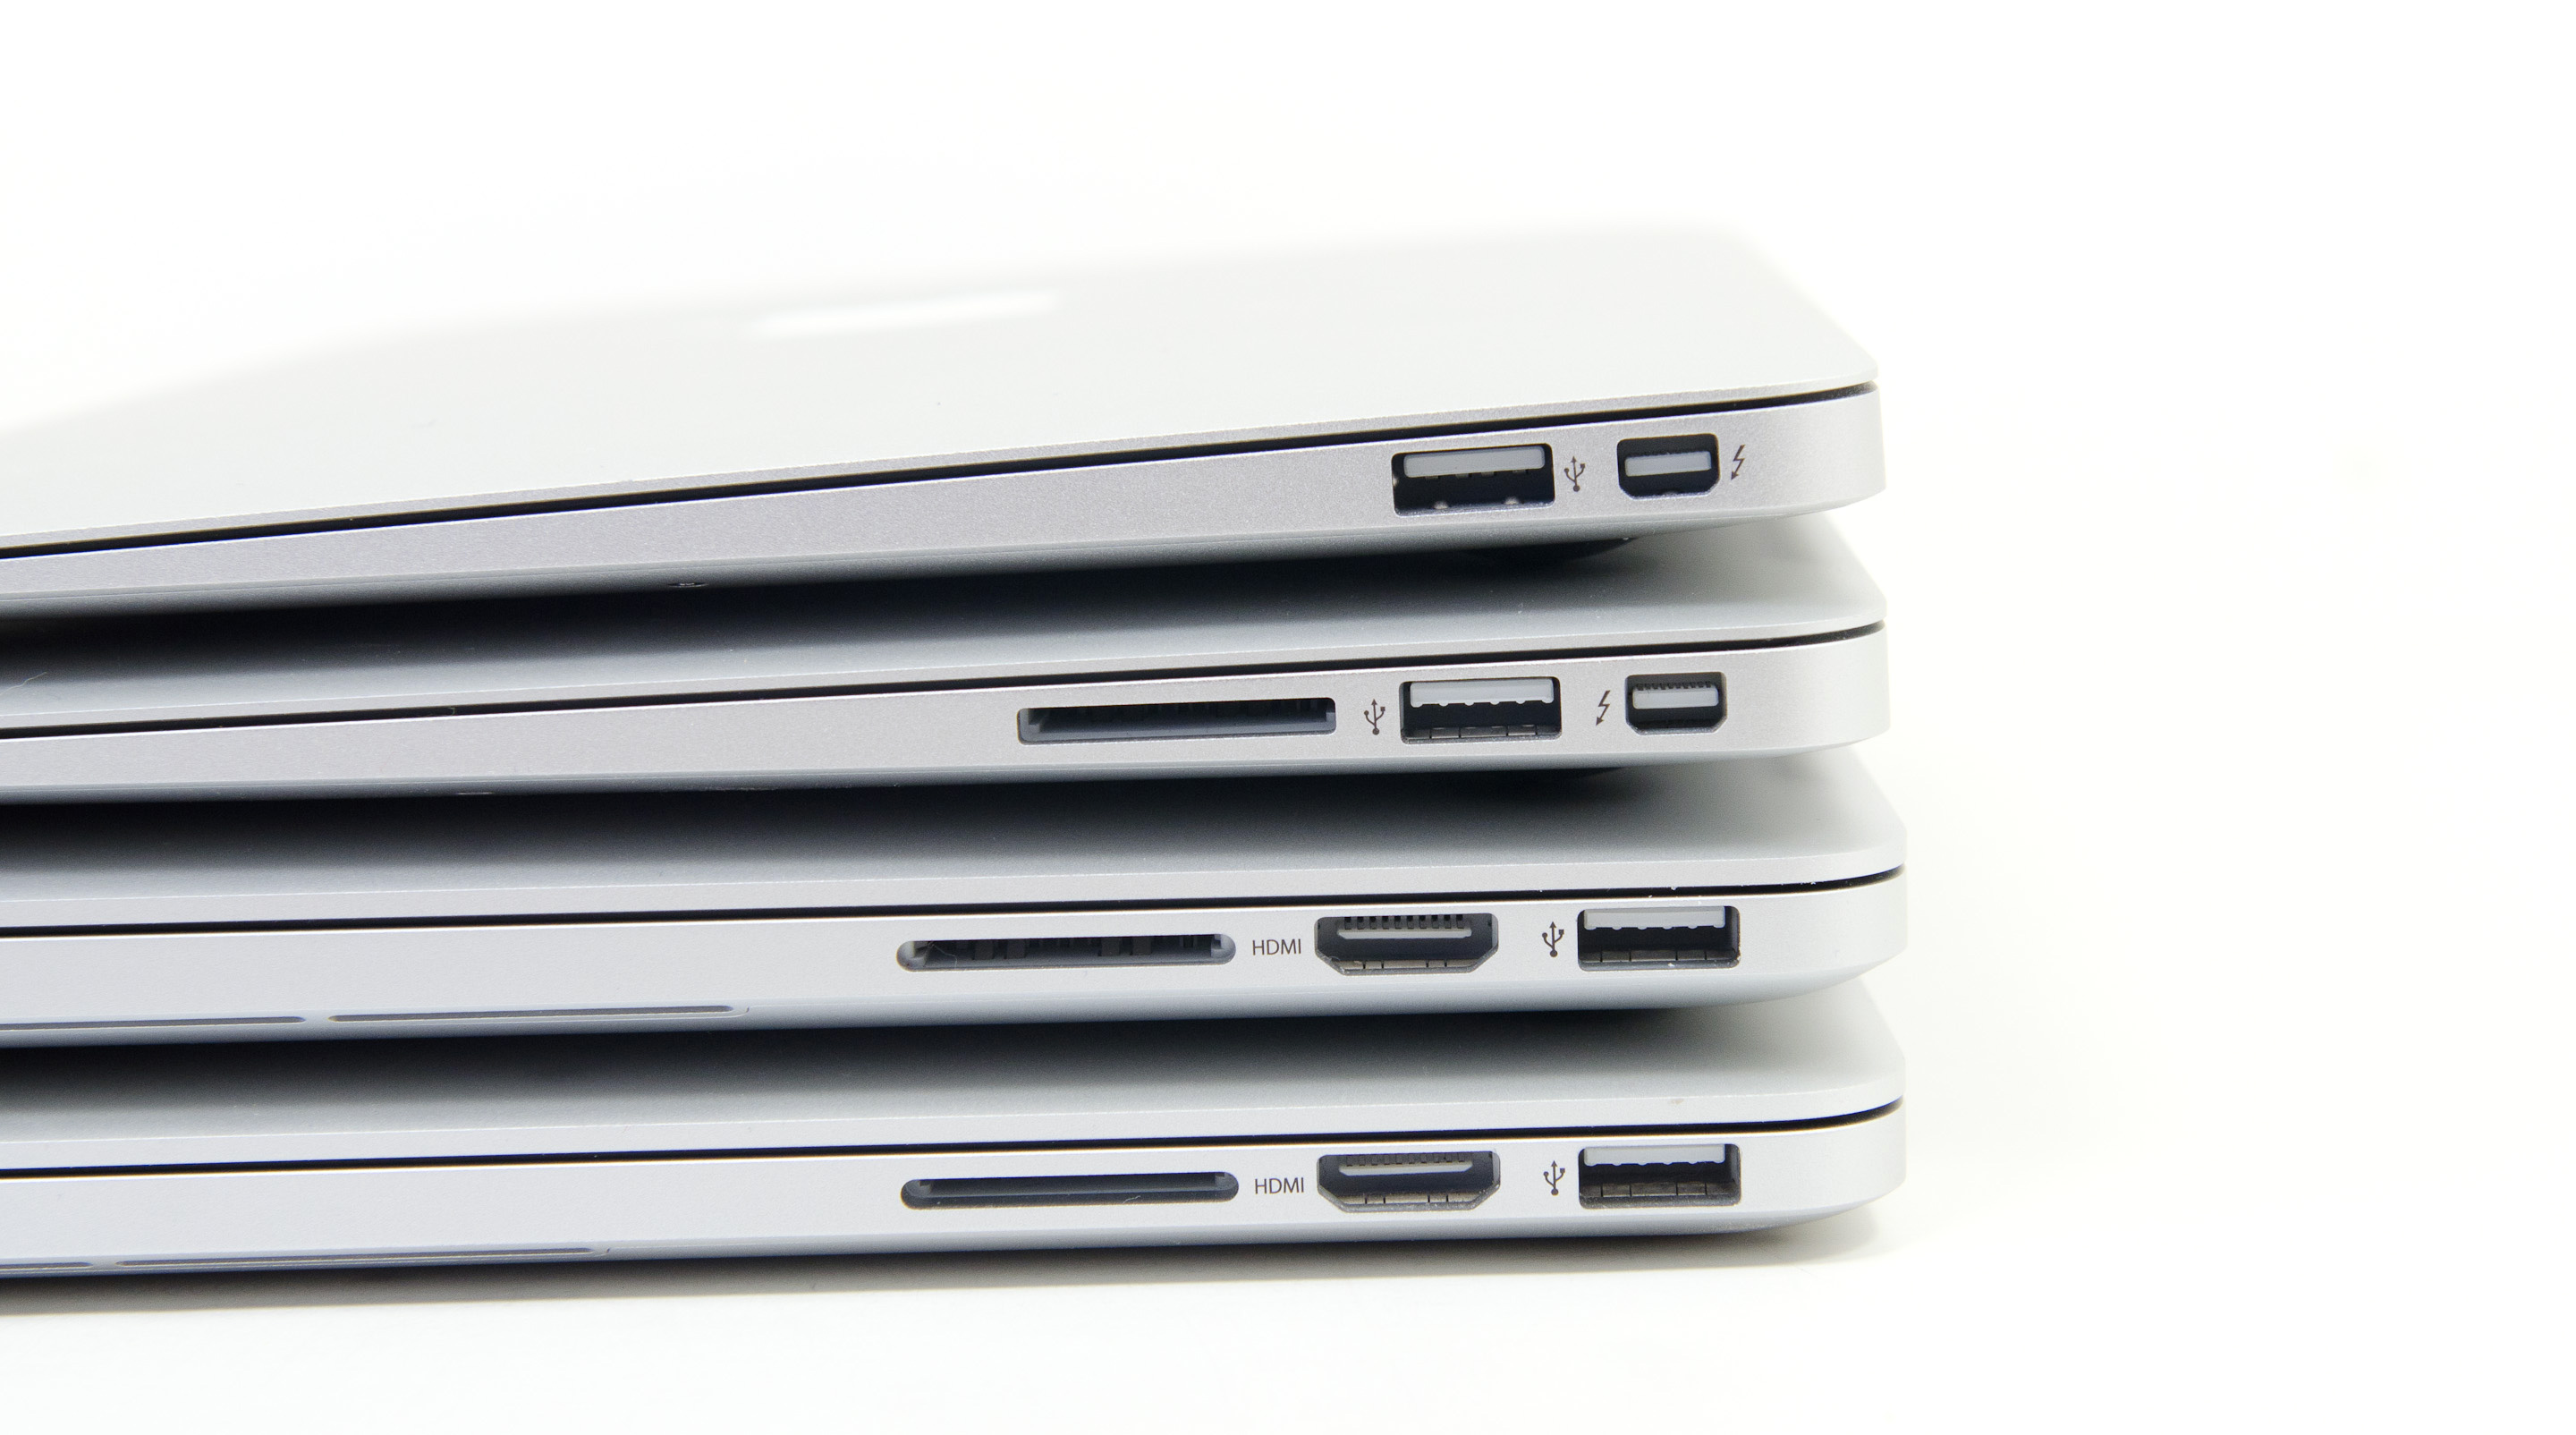 13-inch Retina MacBook Pro Review (Late 2012)